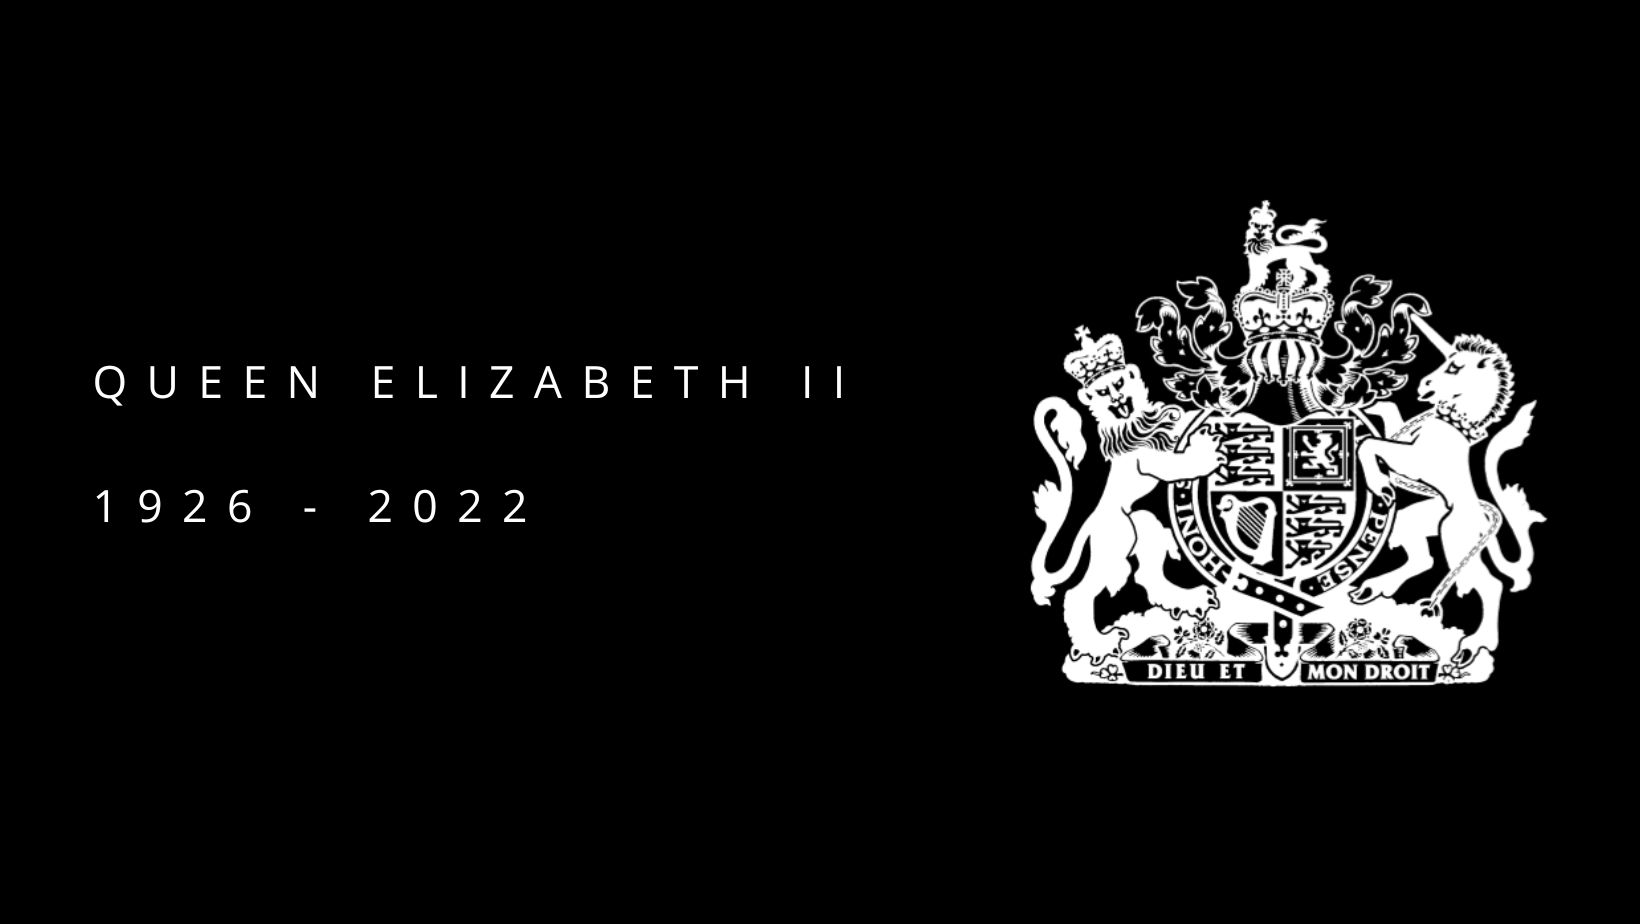 Her Majesty Queen Elizabeth II – Our Statement of Condolence